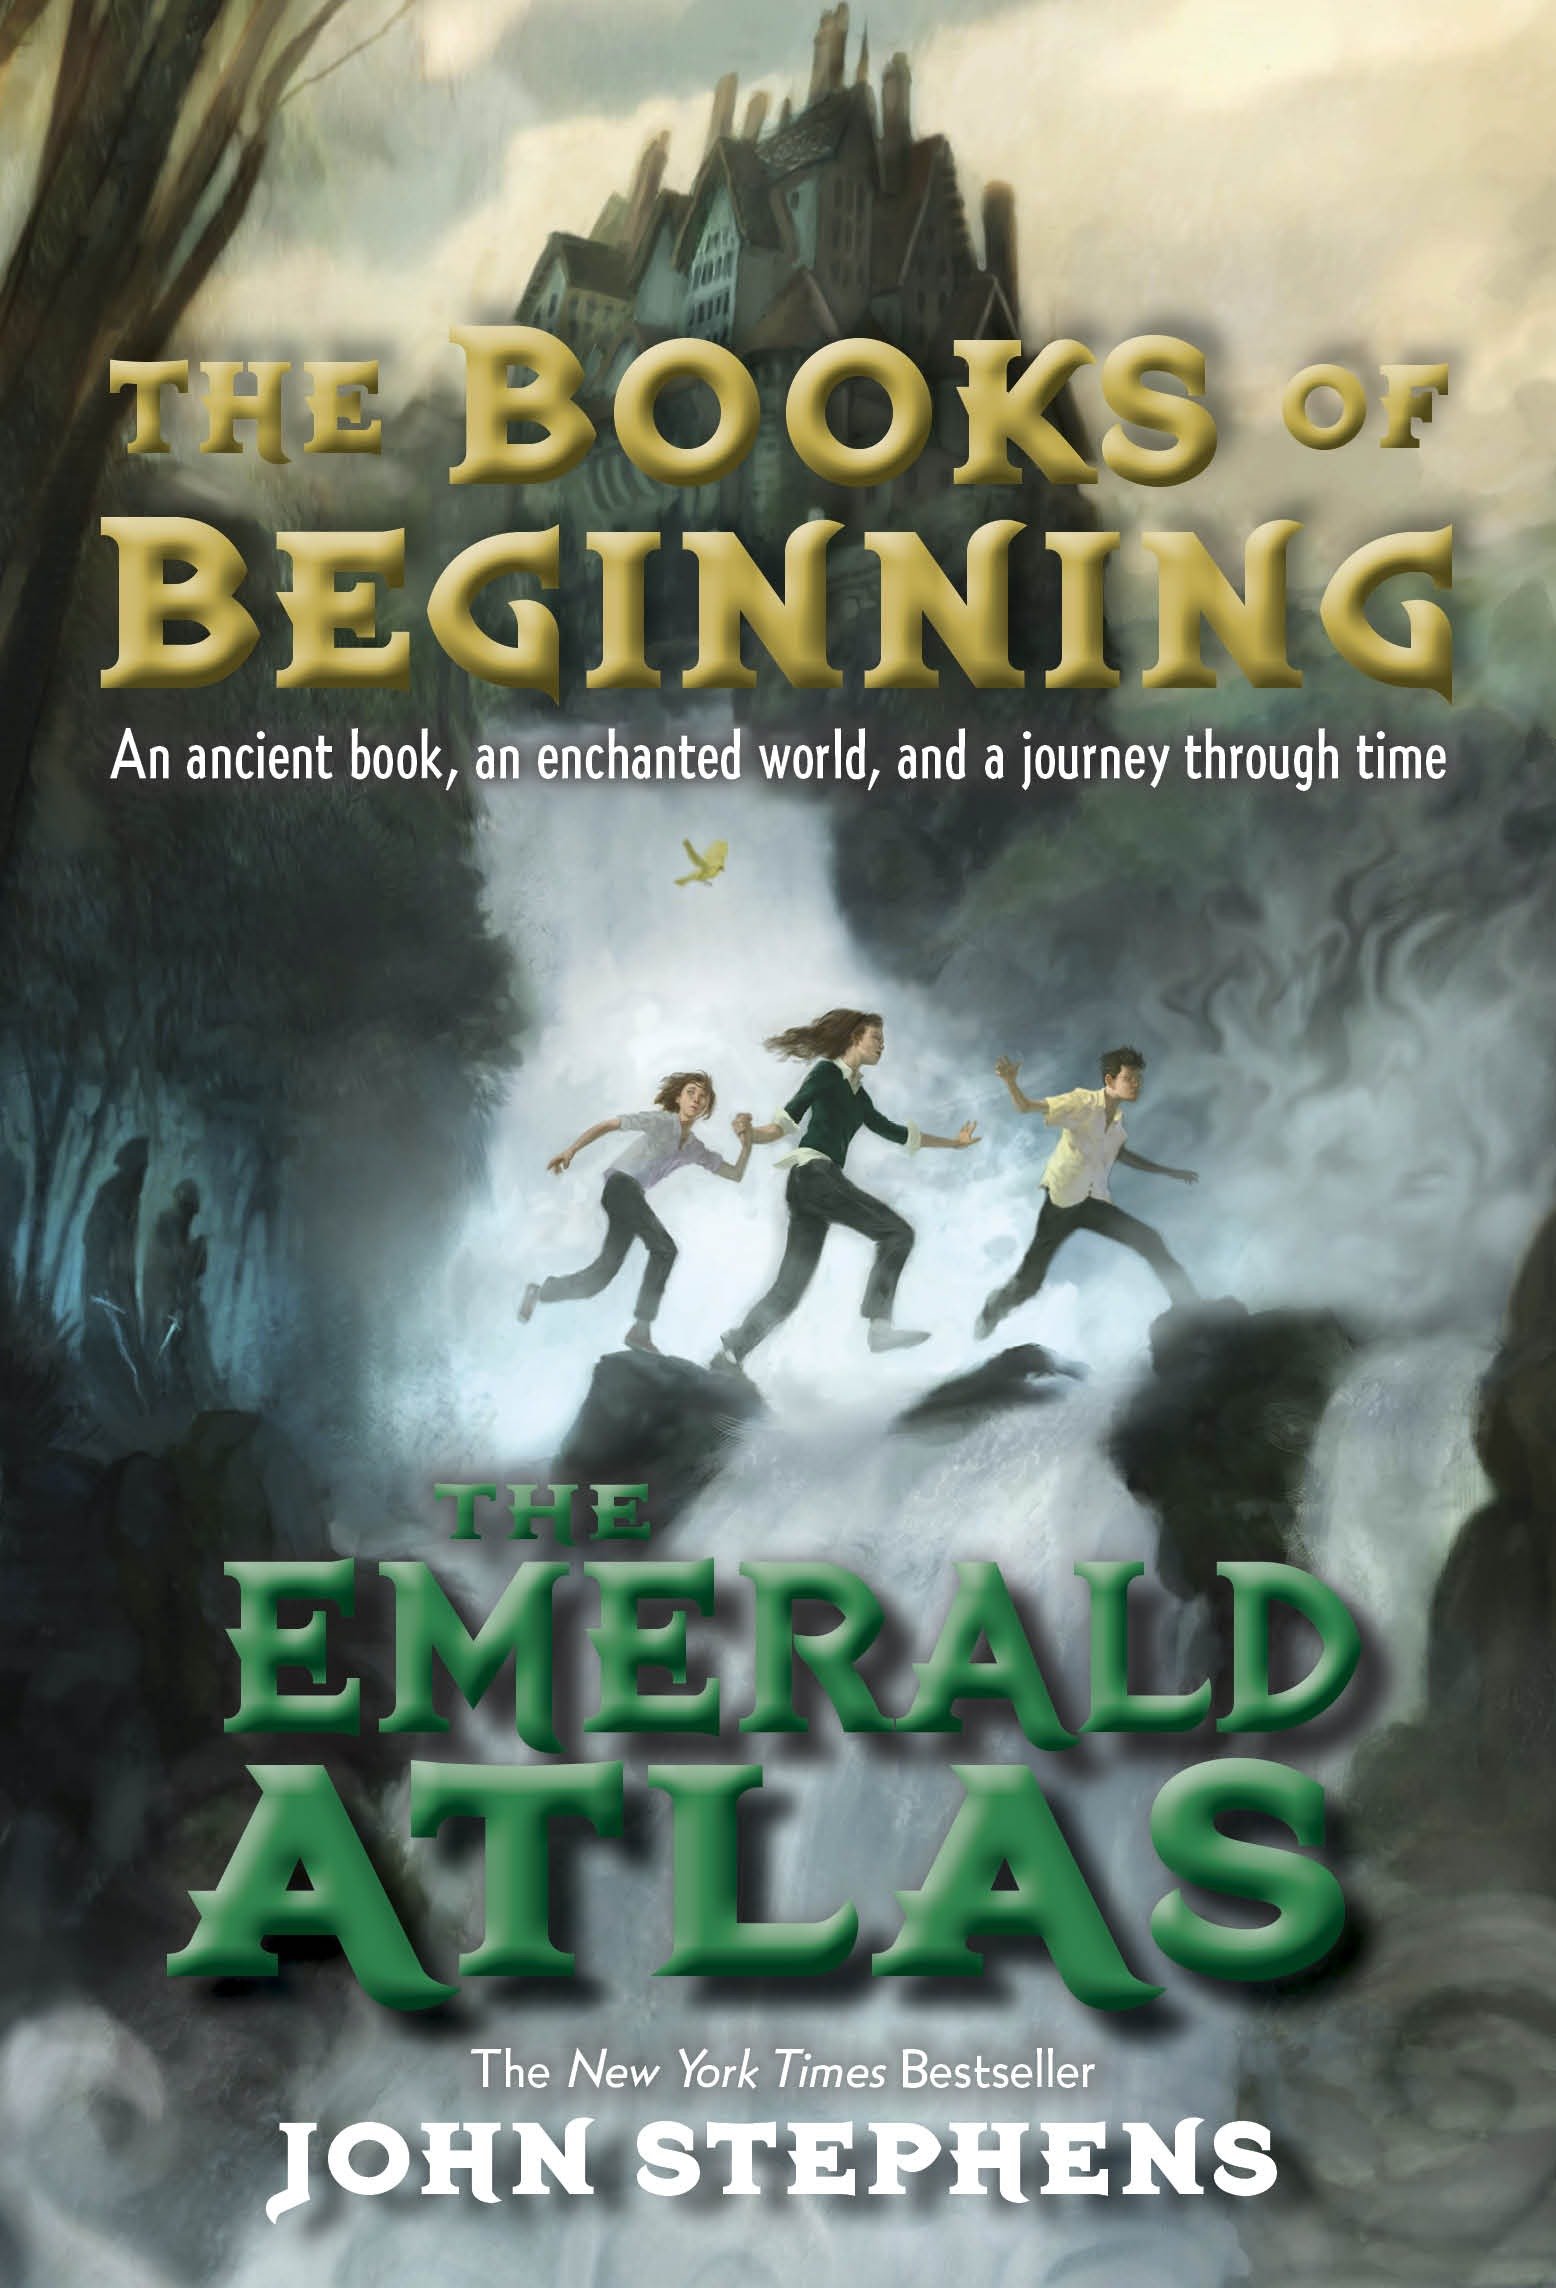 The emerald atlas cover image